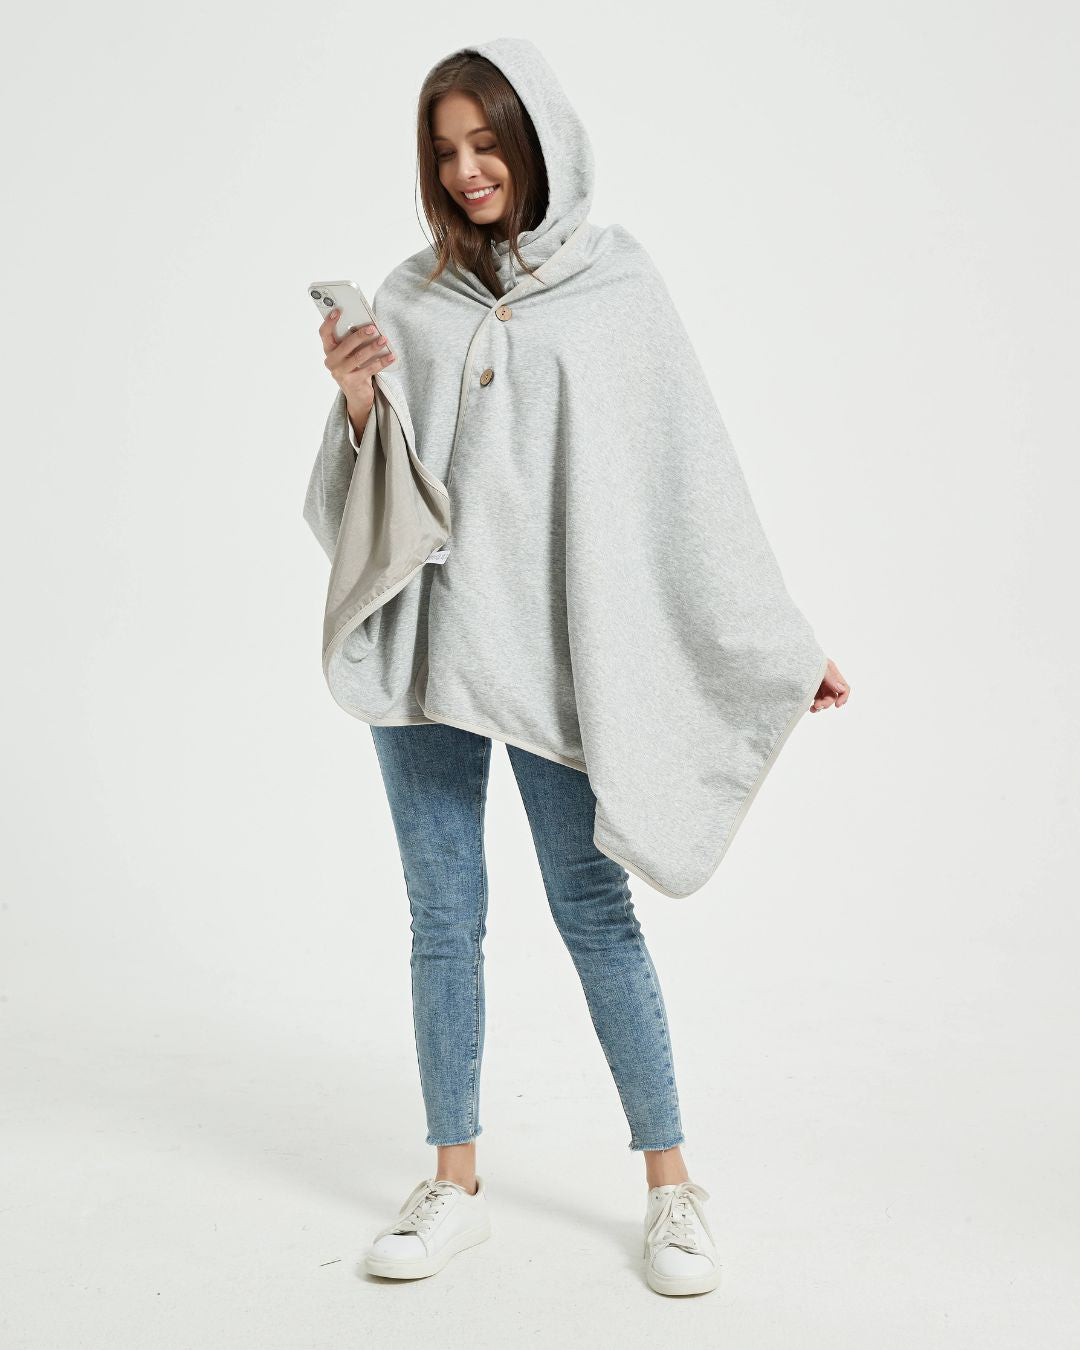 Homehours EMF Adult Hooded Poncho - Radiation Blanket, Wearable